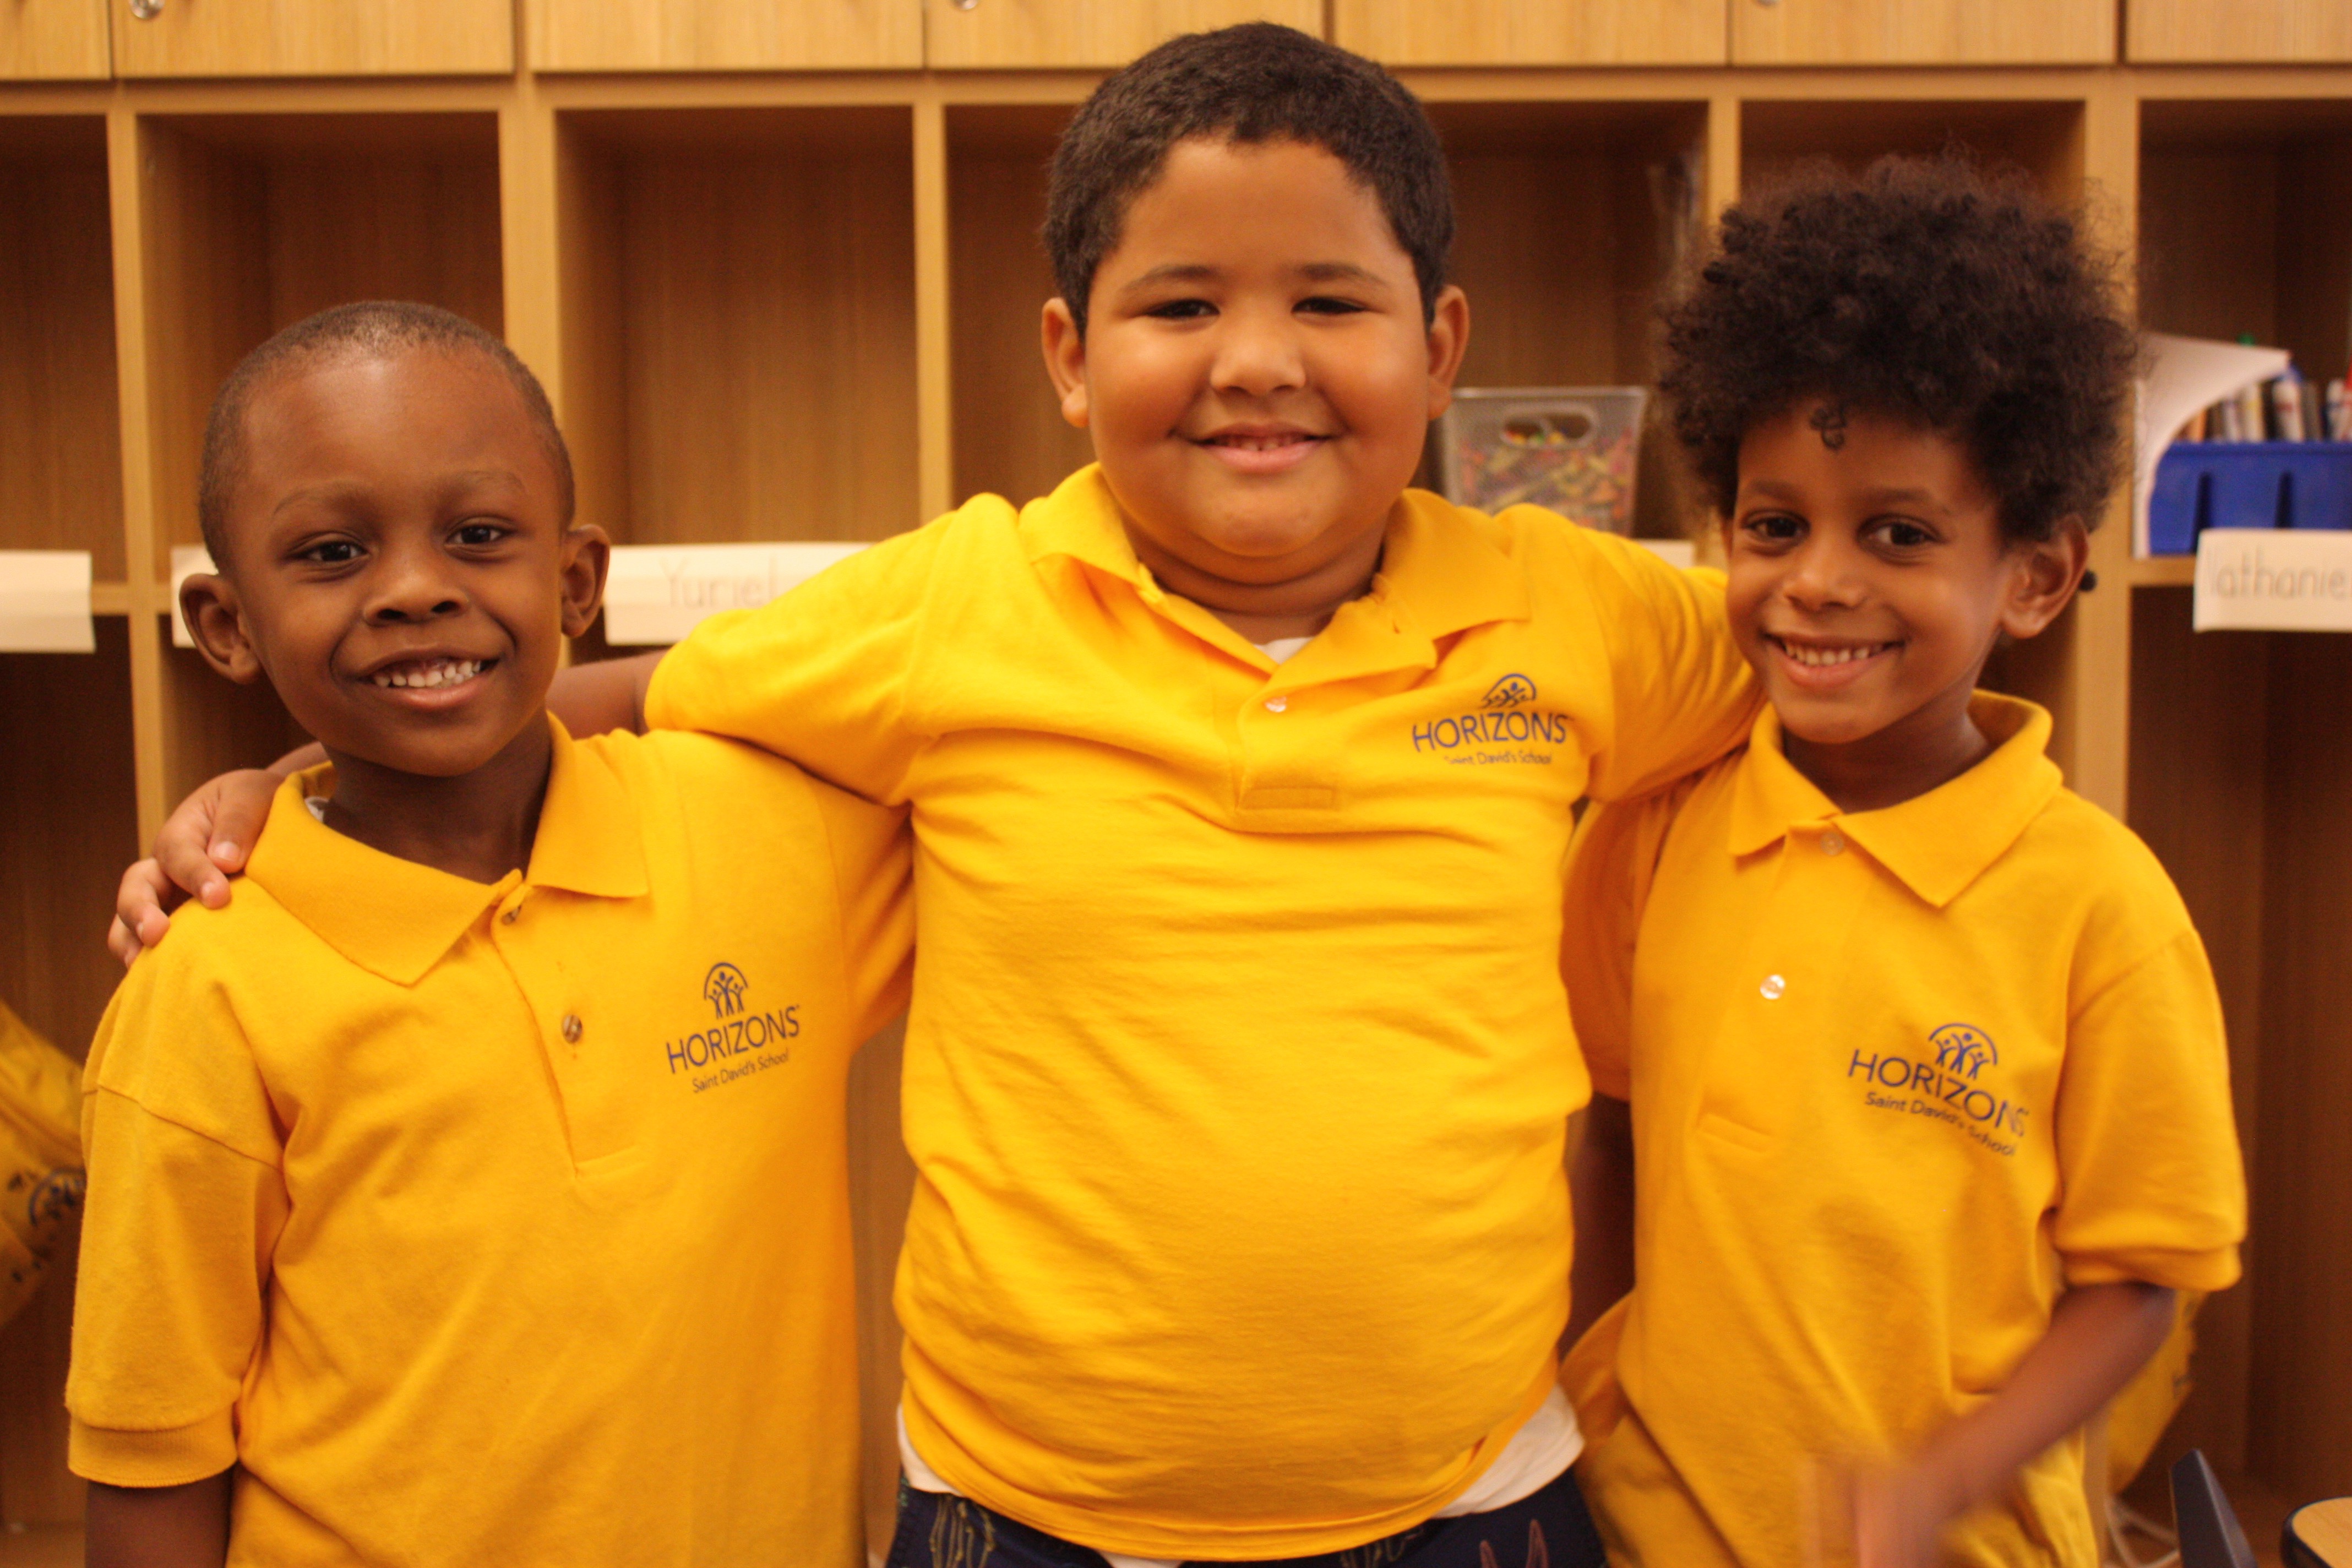 Three smiling young boys wearing yellow Horizons program shirts